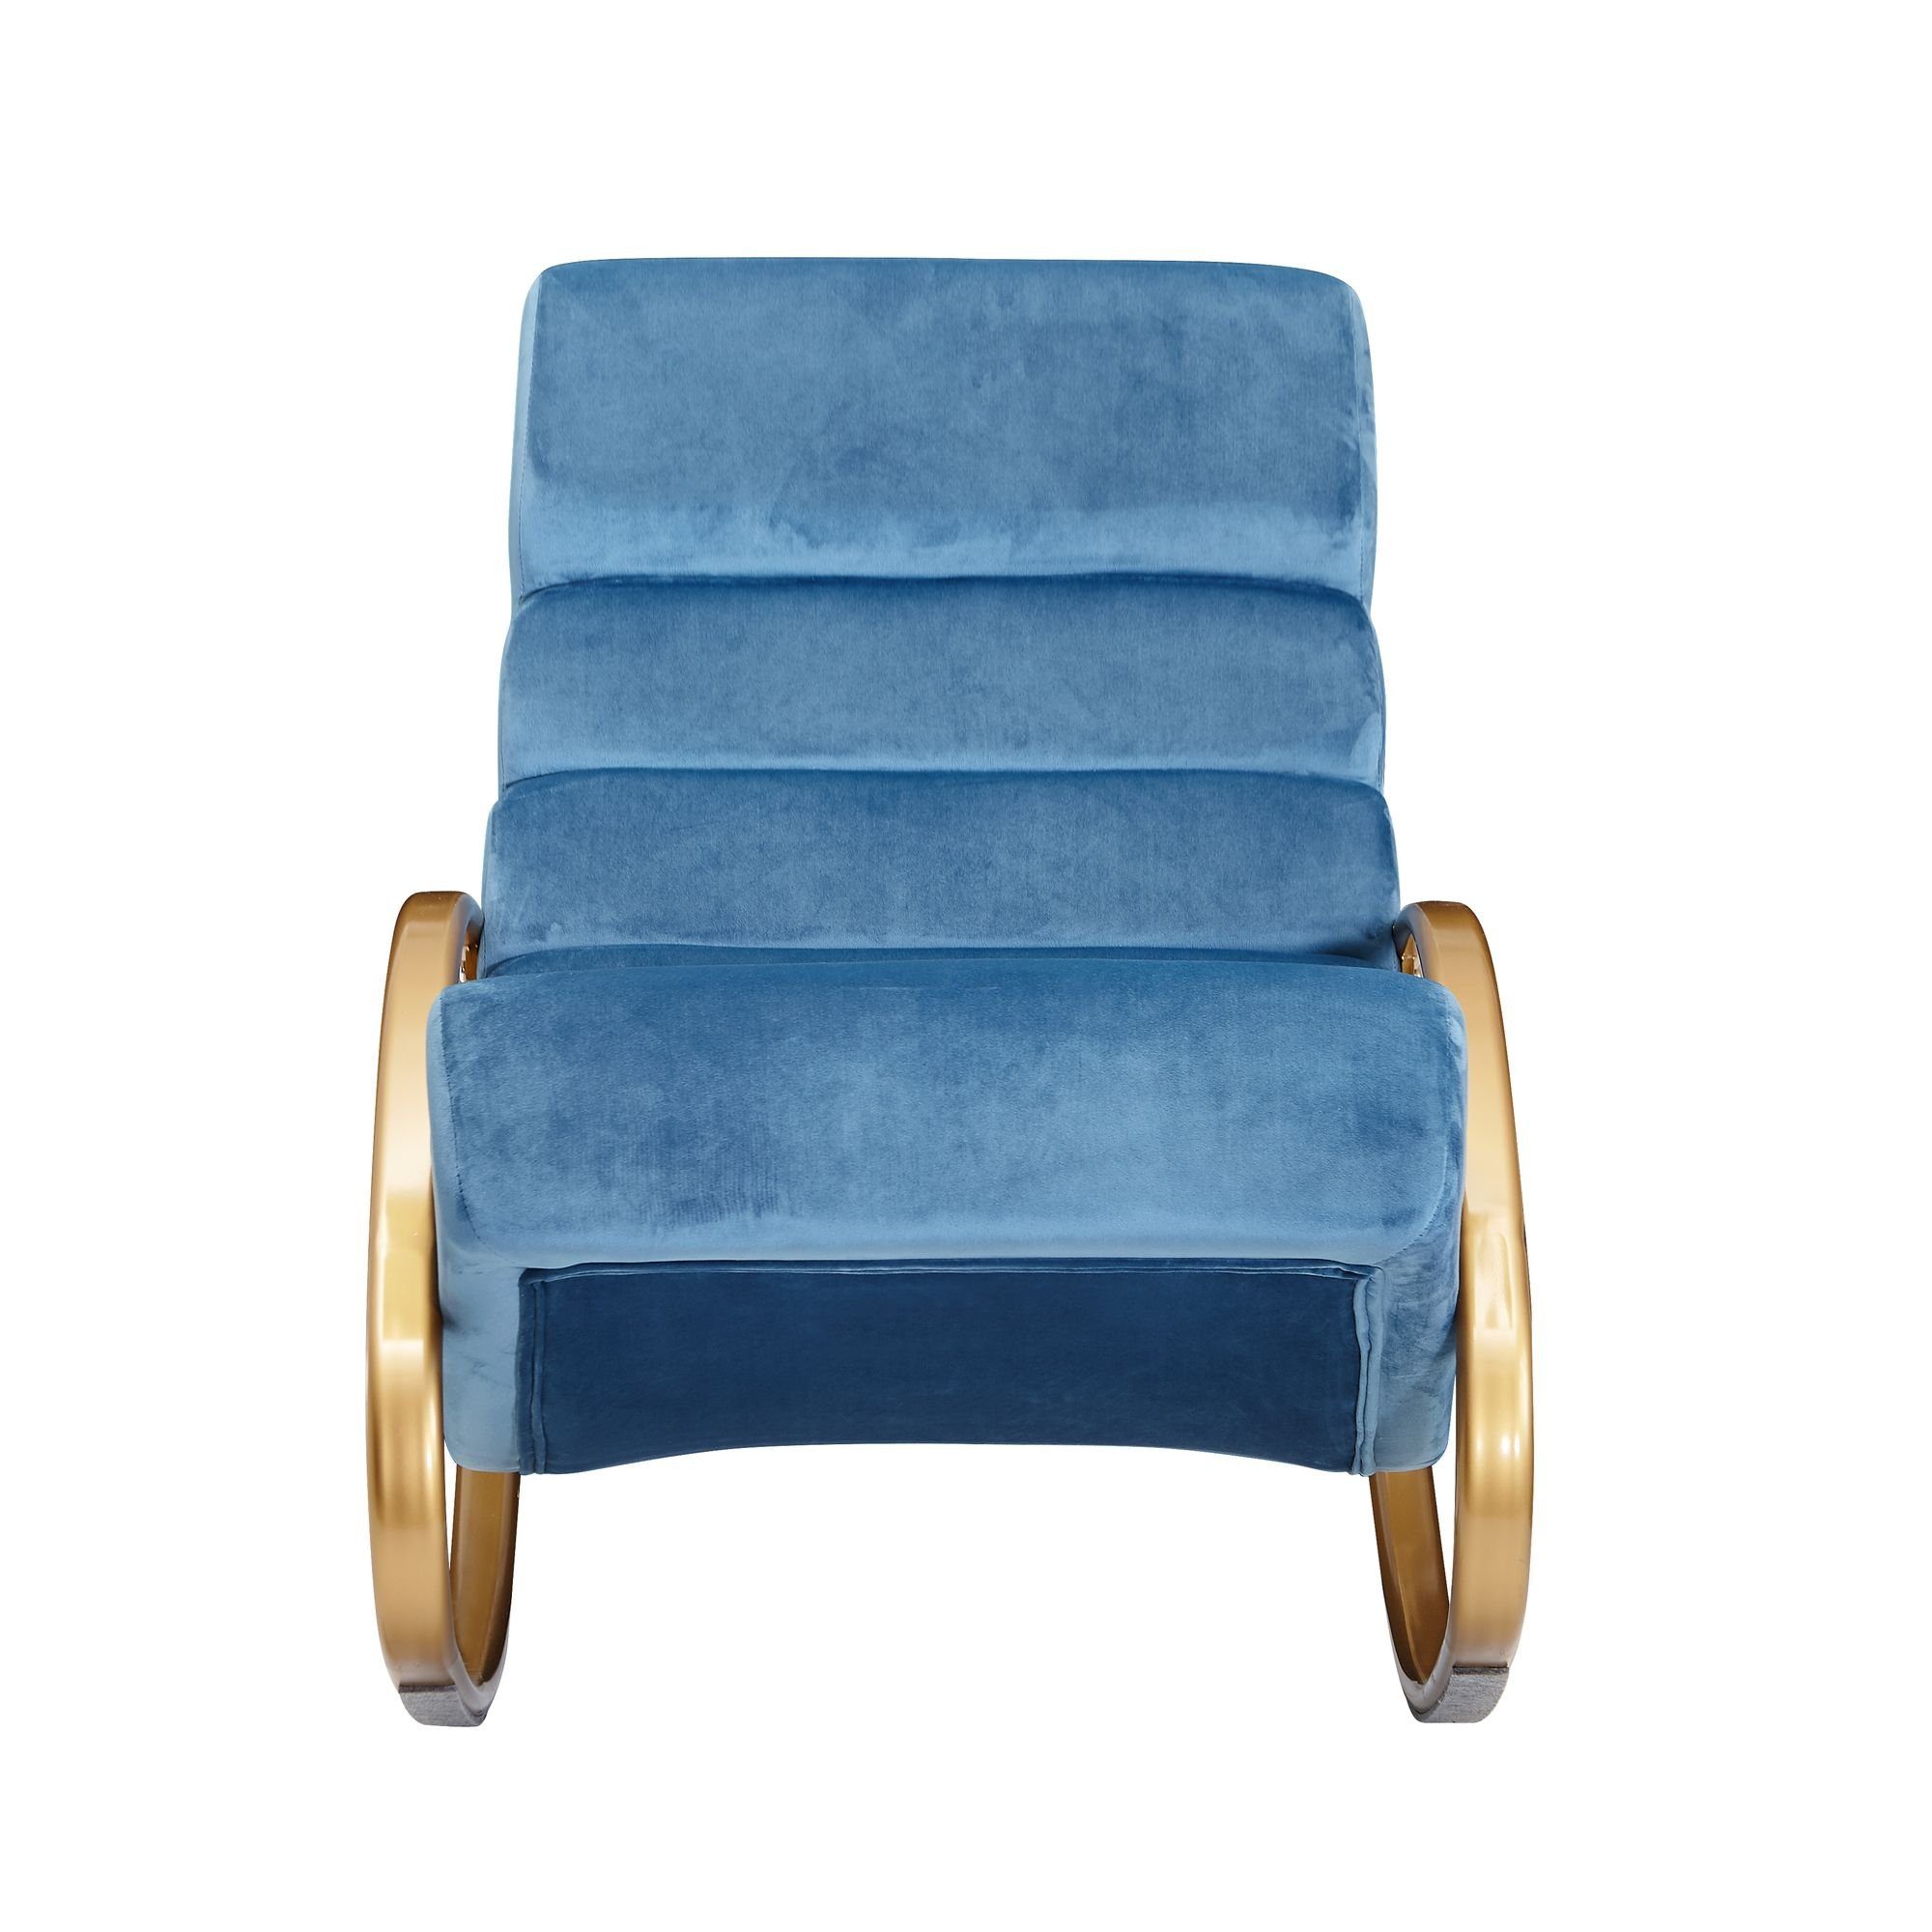 | Schaukelsessel Gold Blau Bequemer KADIMA - | Wippfunktion Schaukelstuhl MUR DESIGN mit Relaxsessel Blau